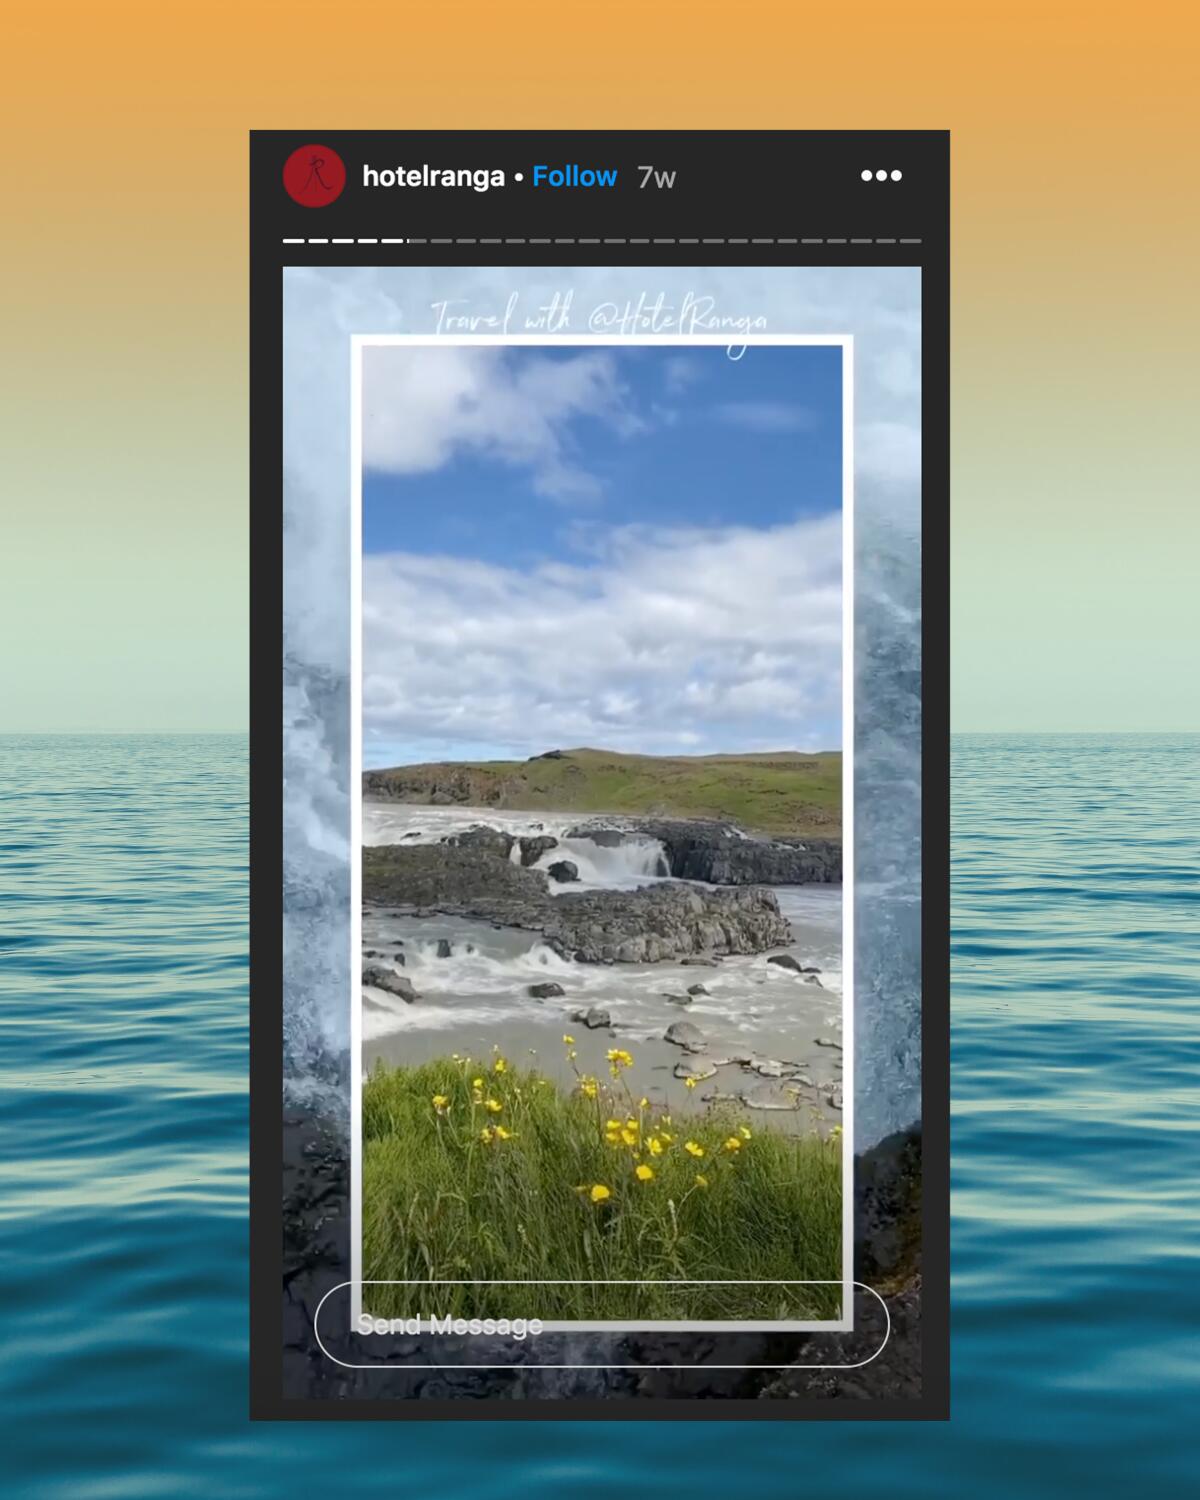 Hotel Ranga's Instagram stories show off Icelandic waterfalls every Wednesday.